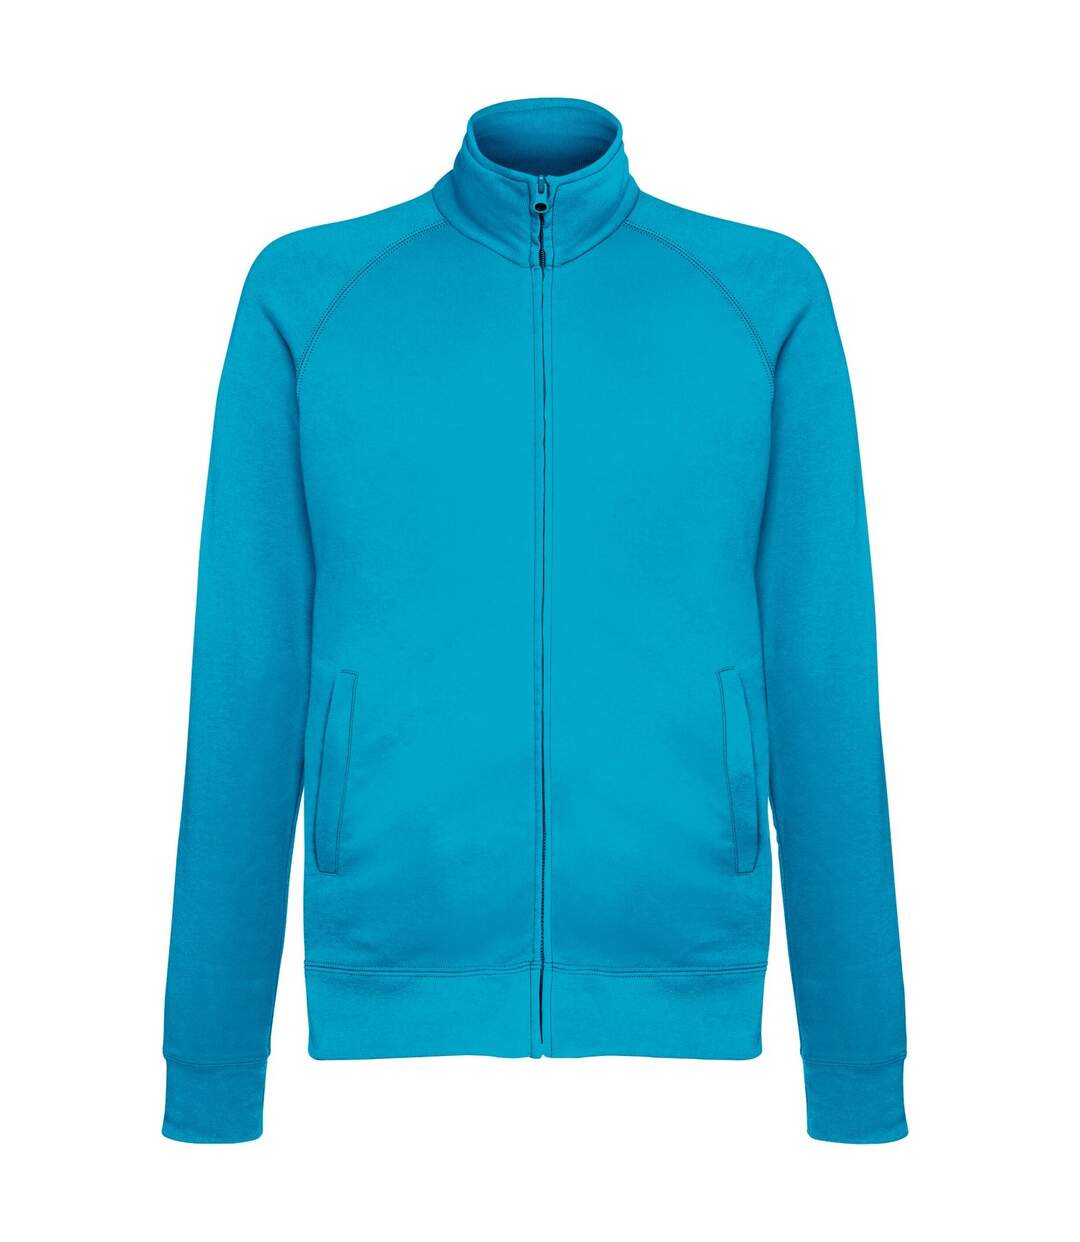 Fruit Of The Loom Mens Lightweight Full Zip Sweatshirt Jacket (Azure Blue)